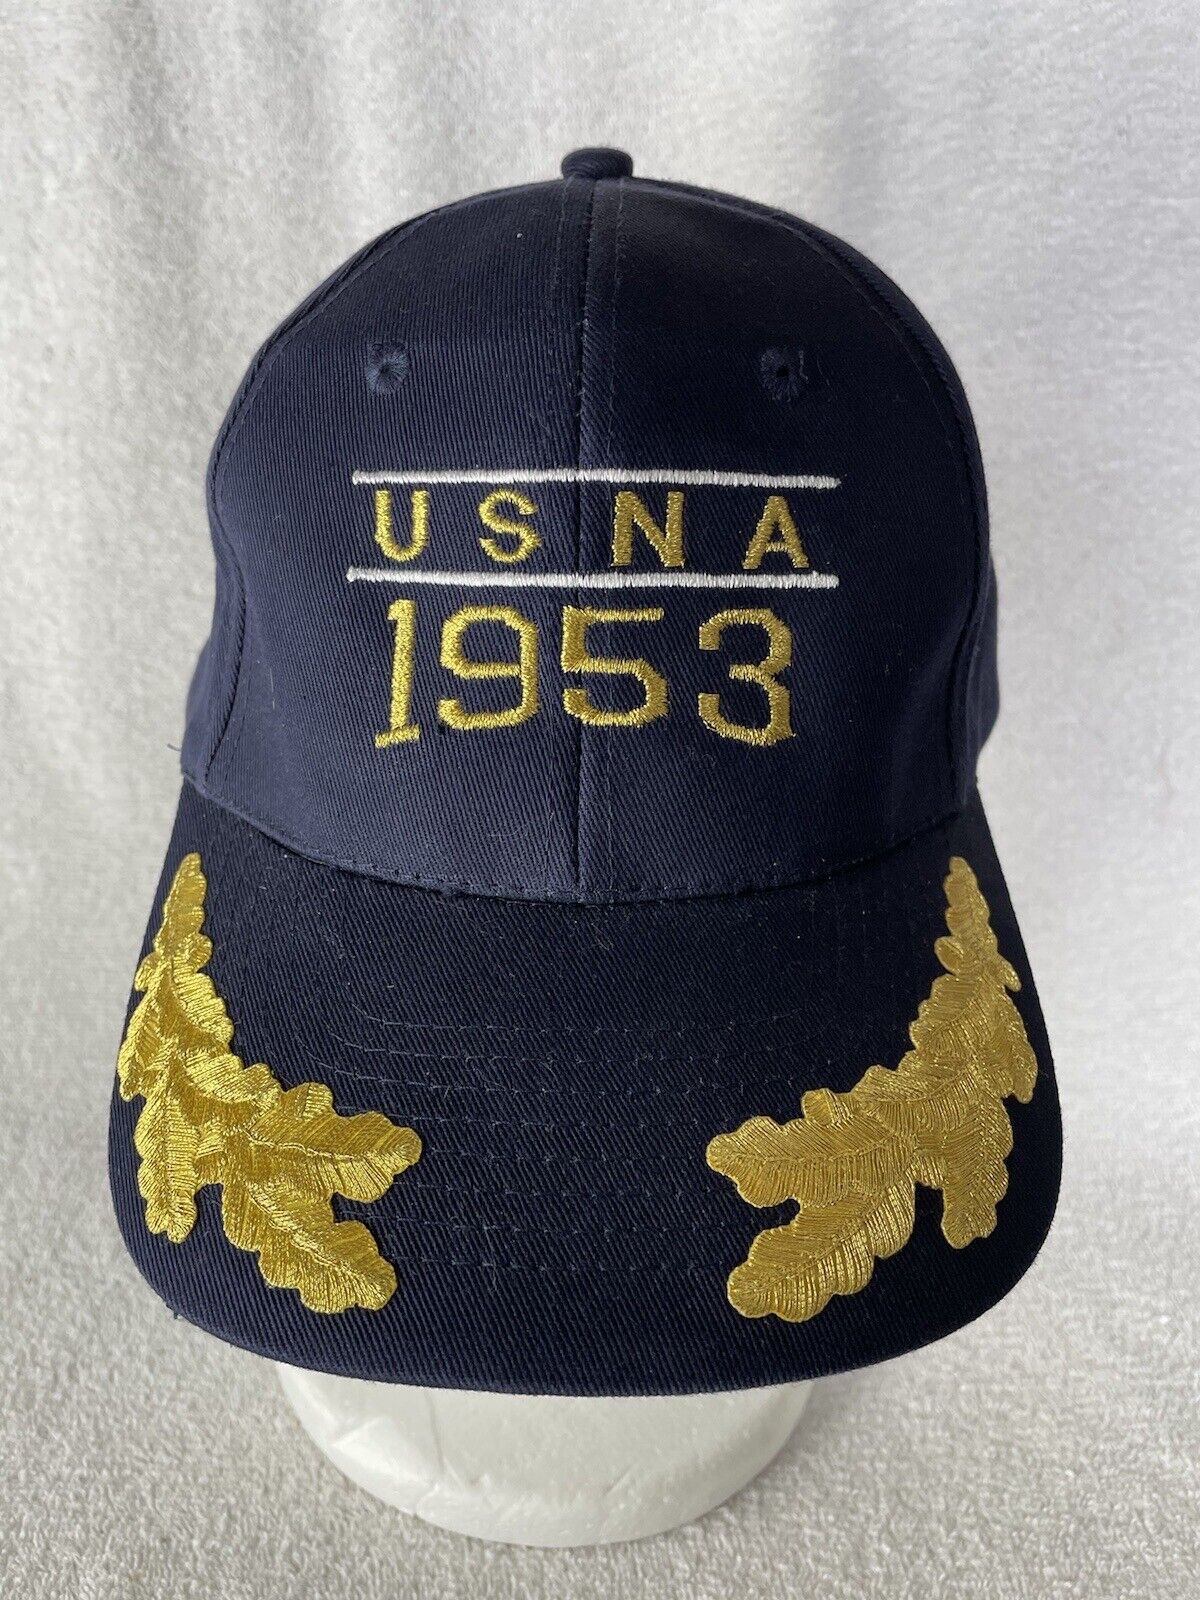 Vintage Original 1953 USNA Ballcap Hat Mens U.S.  Naval Academy Scrambled Eggs